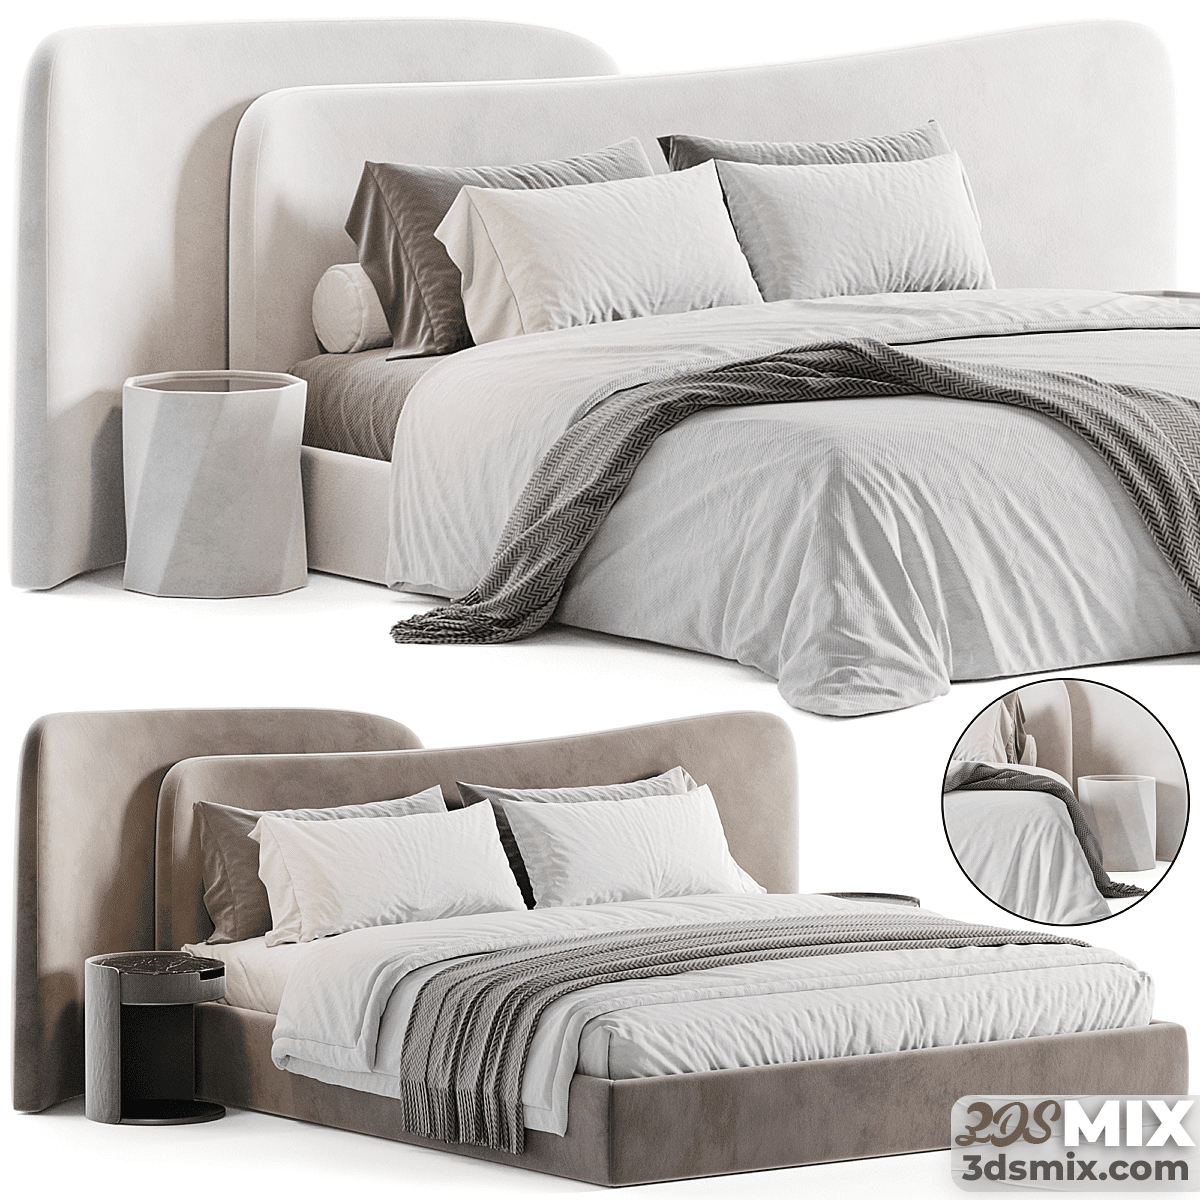 Gaspra Modern Bed Model No 1 3ds Mix